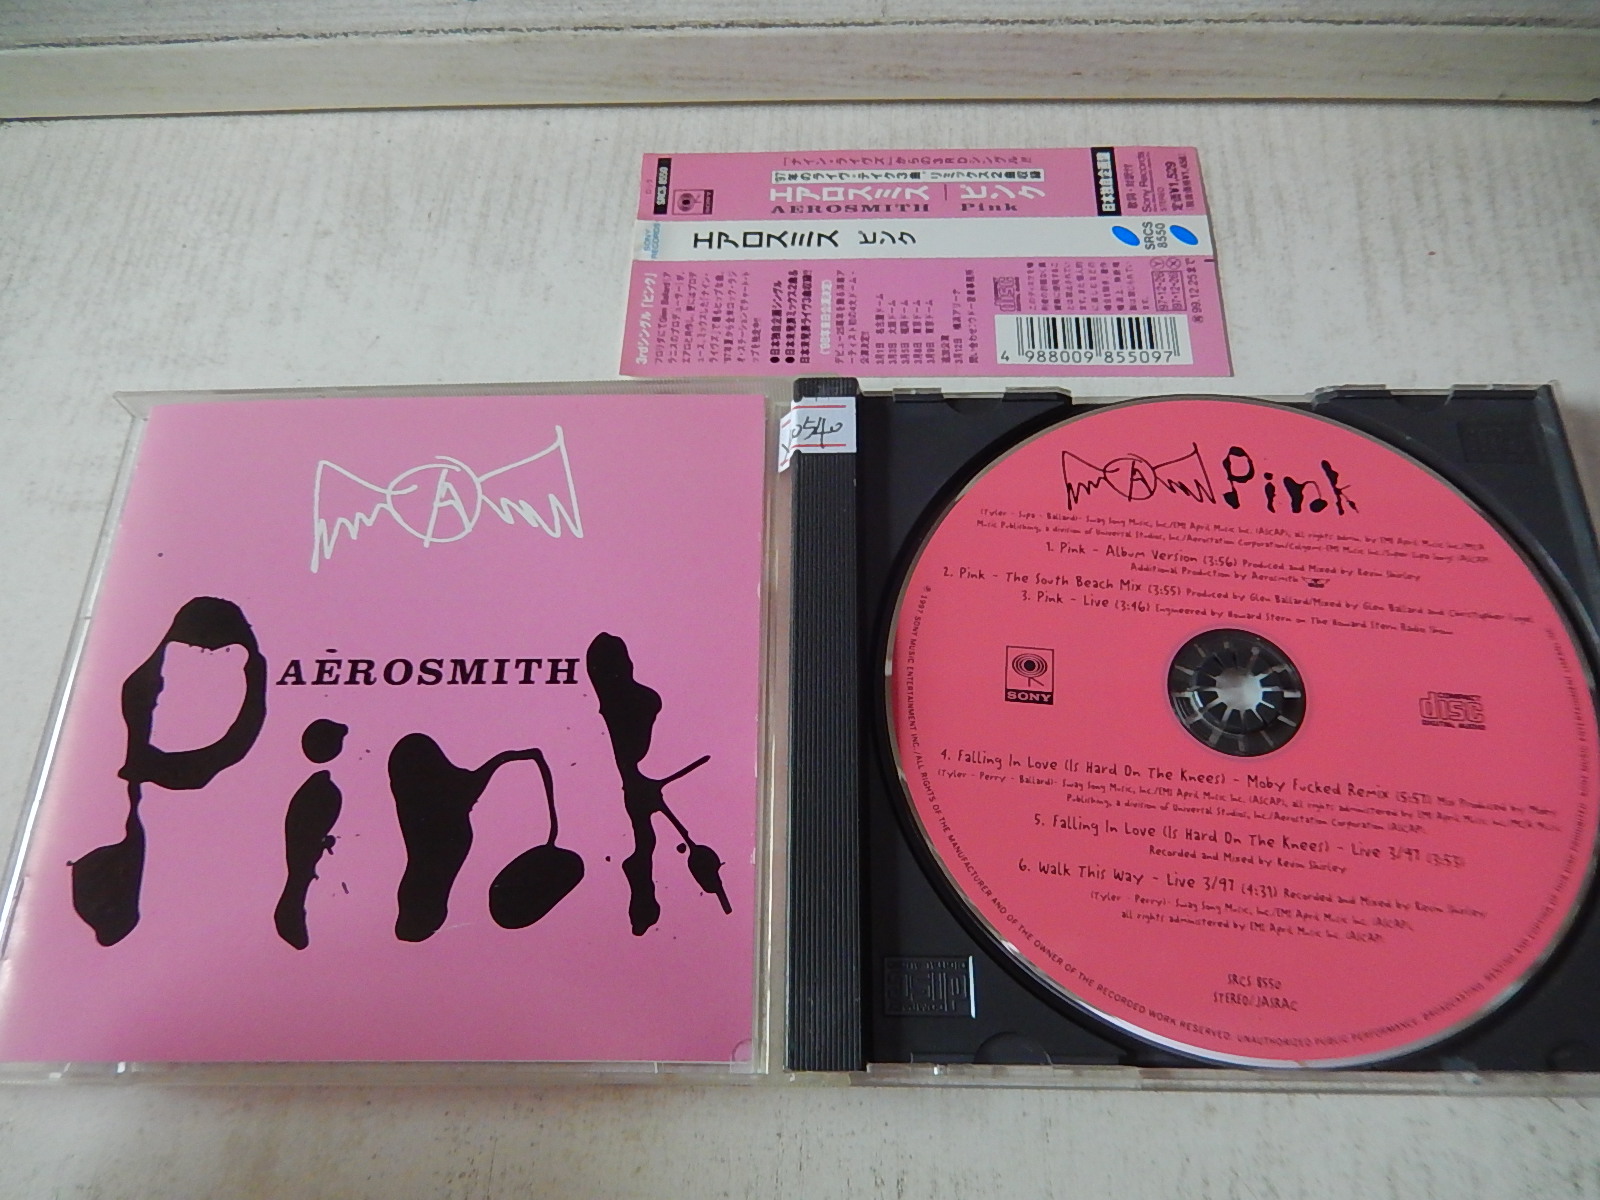 Genuine CD hard rock blacksmith spaceship Aerosmith pink with sidemarker